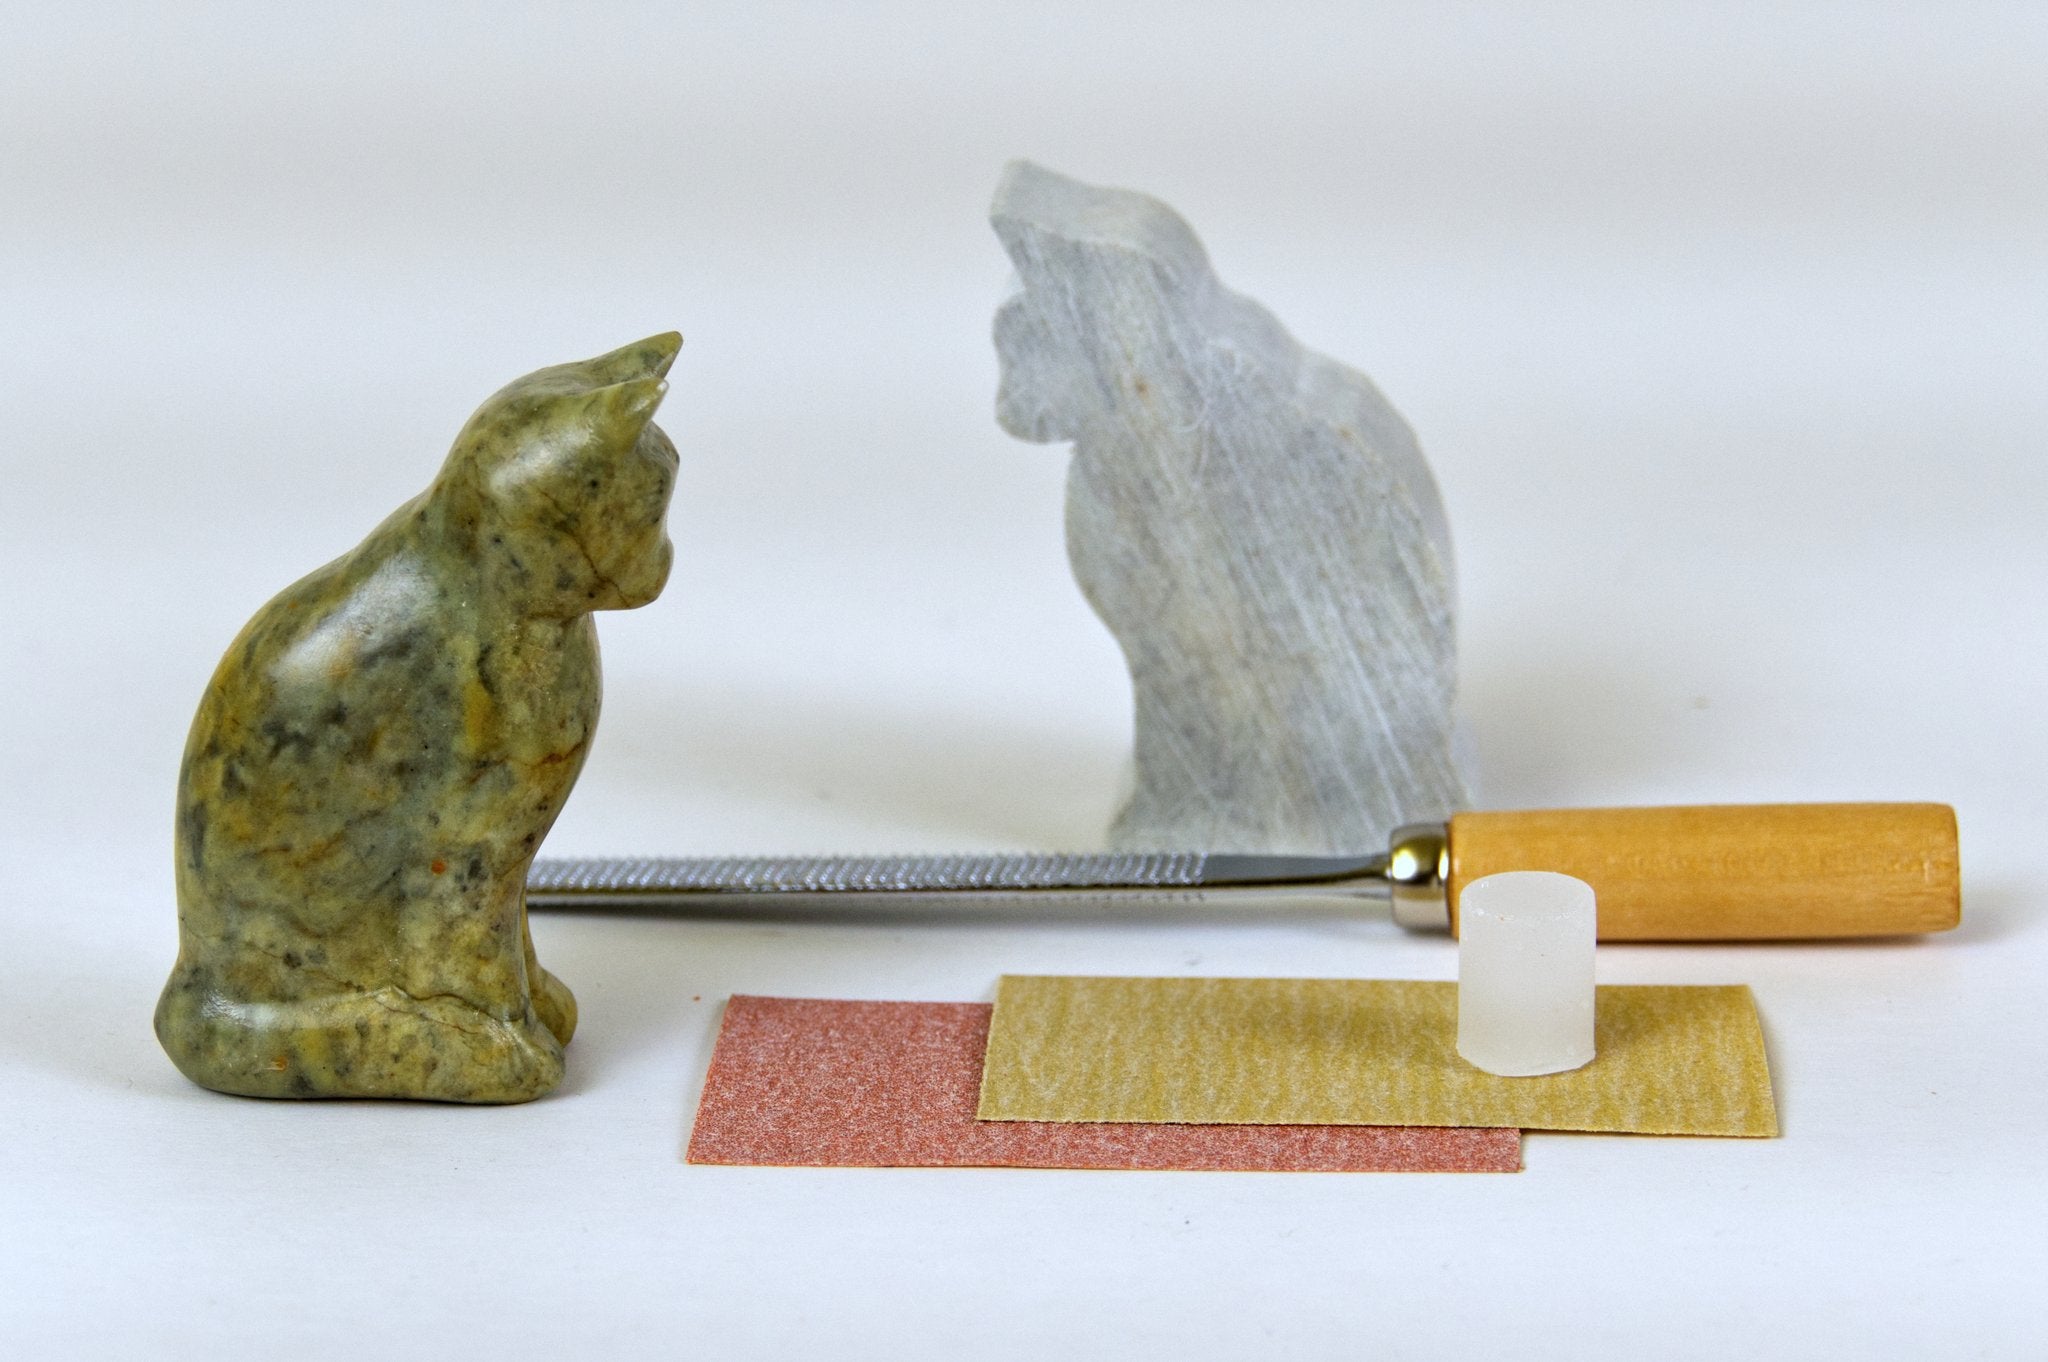 Studiostone Creative Soapstone Carving Kit, Wolf